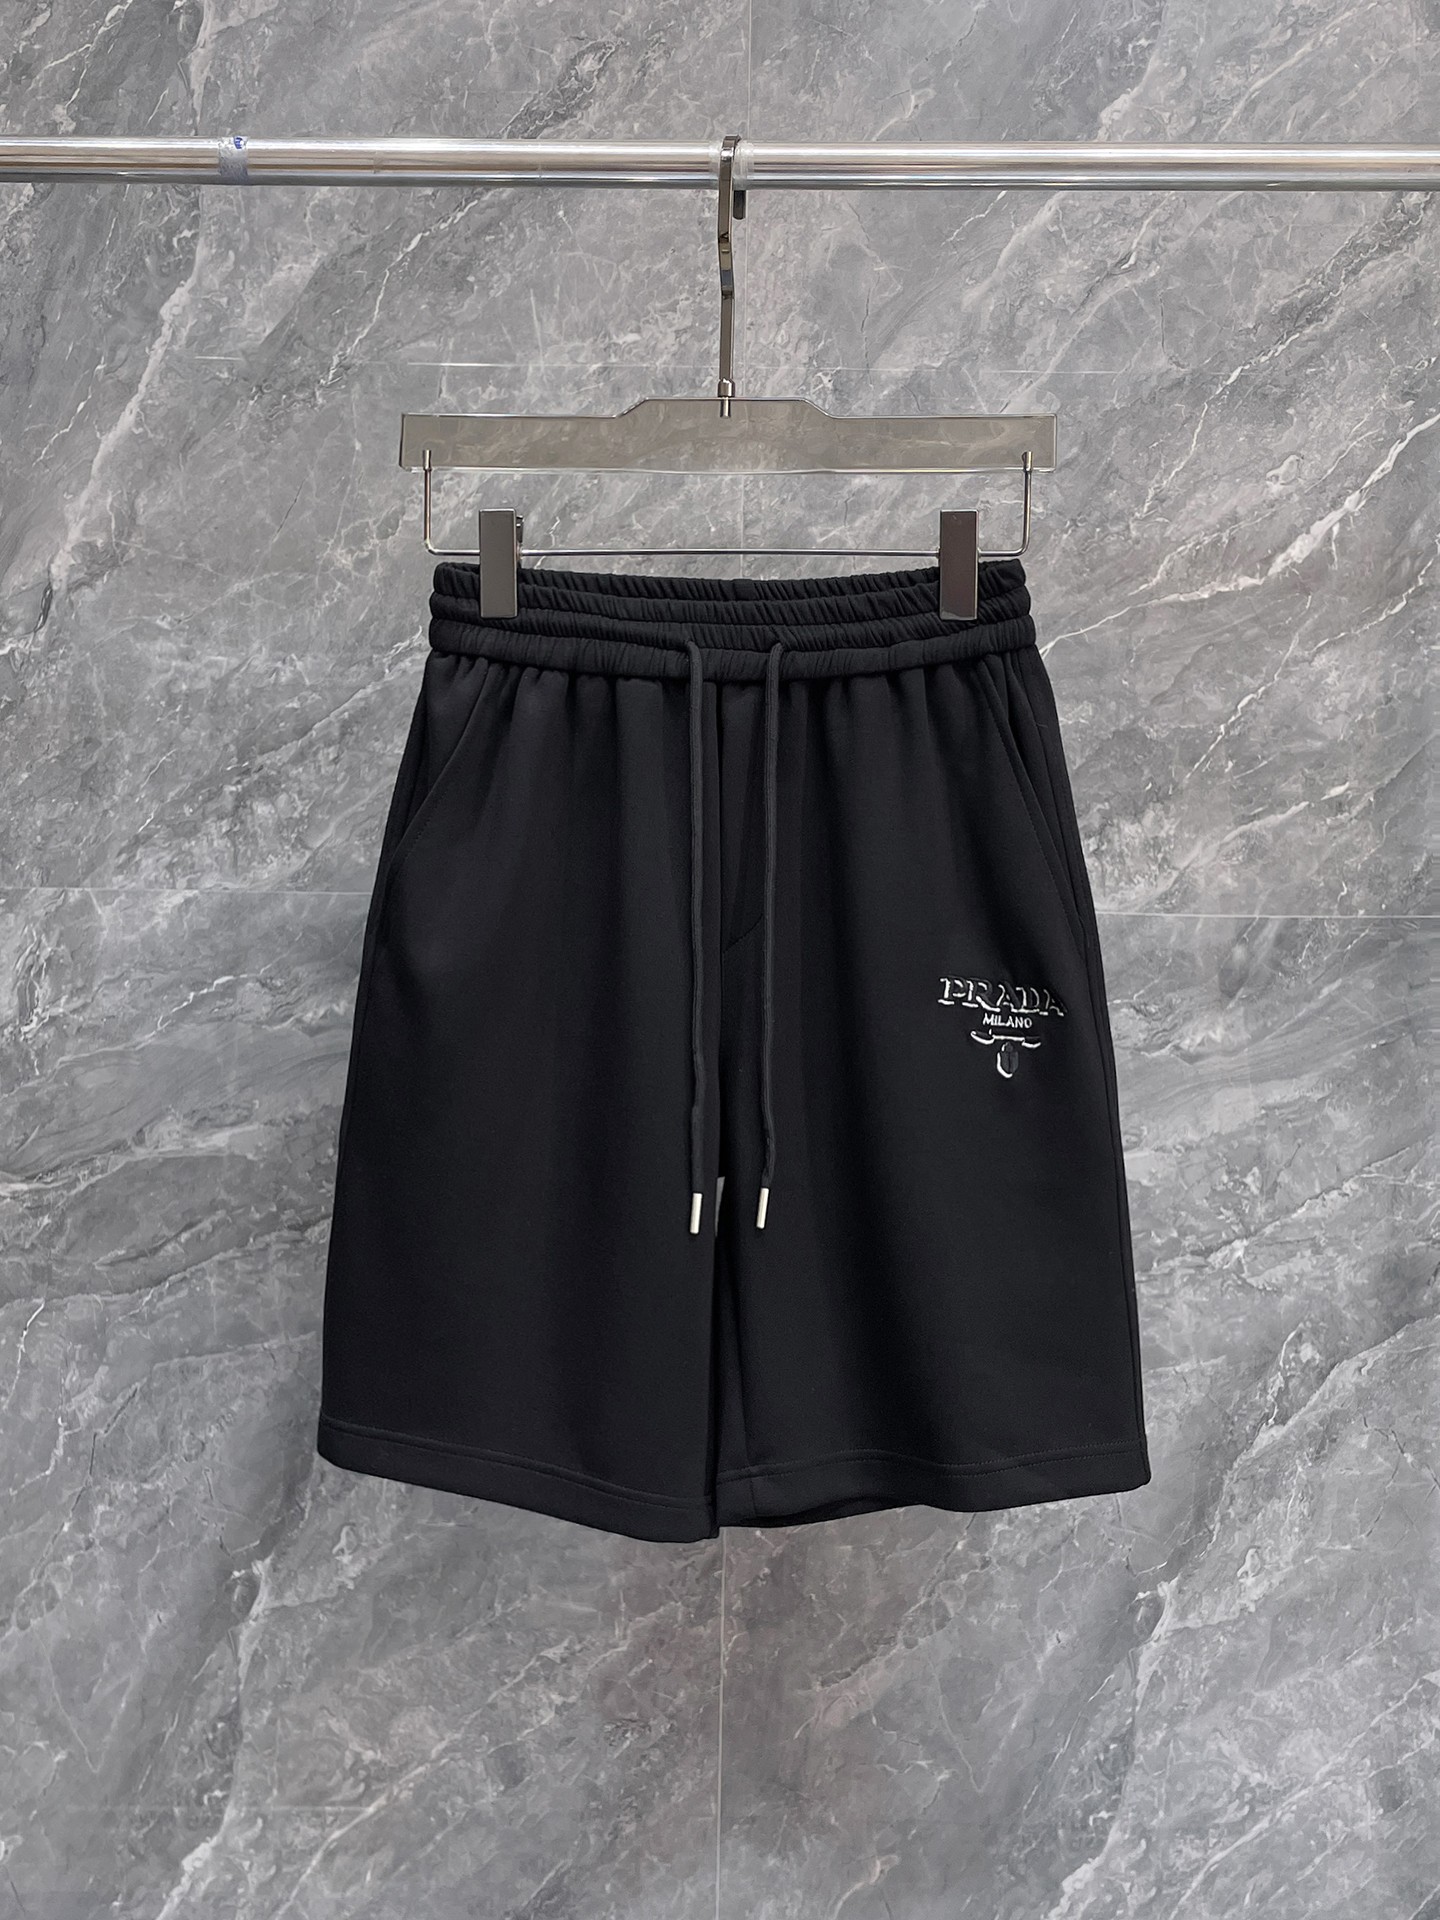 Prada Clothing Shorts Cotton Summer Collection Casual